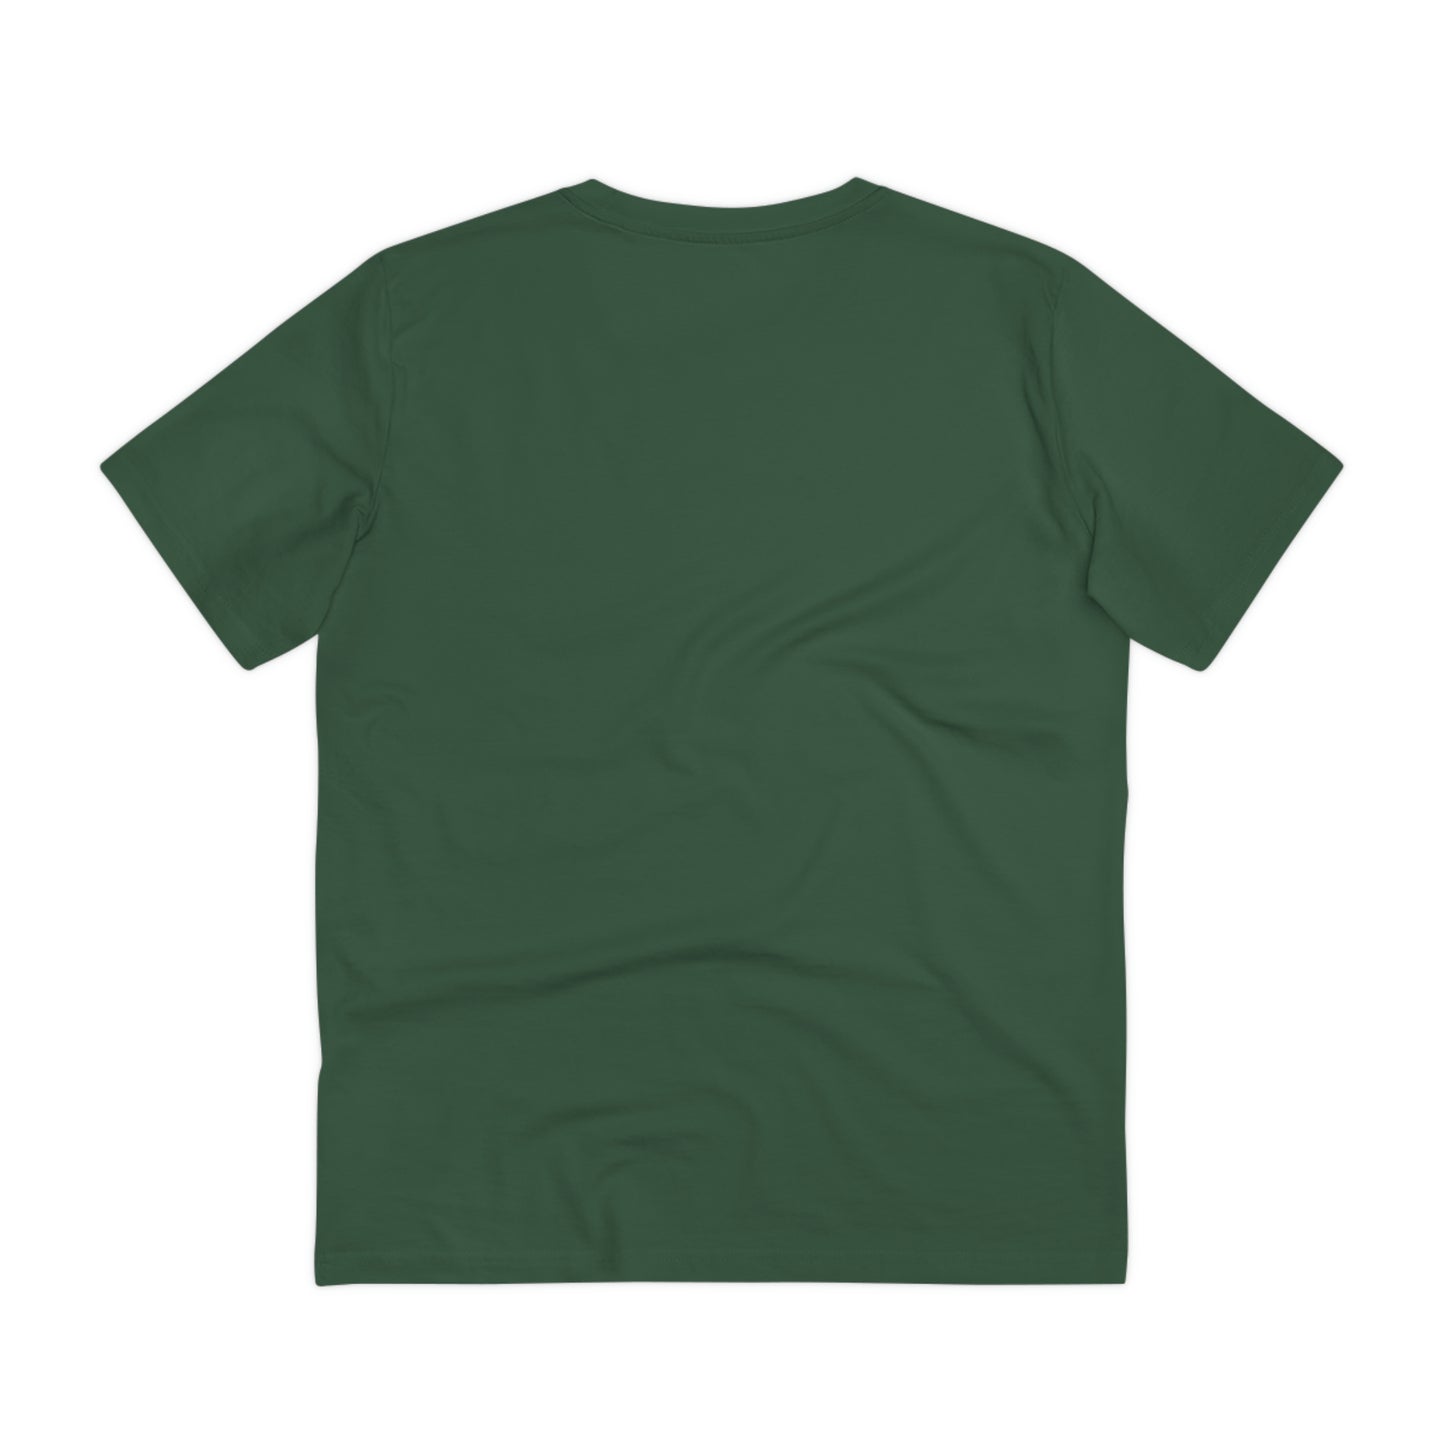 Foggy Project's Logo T-shirt Unisex Green